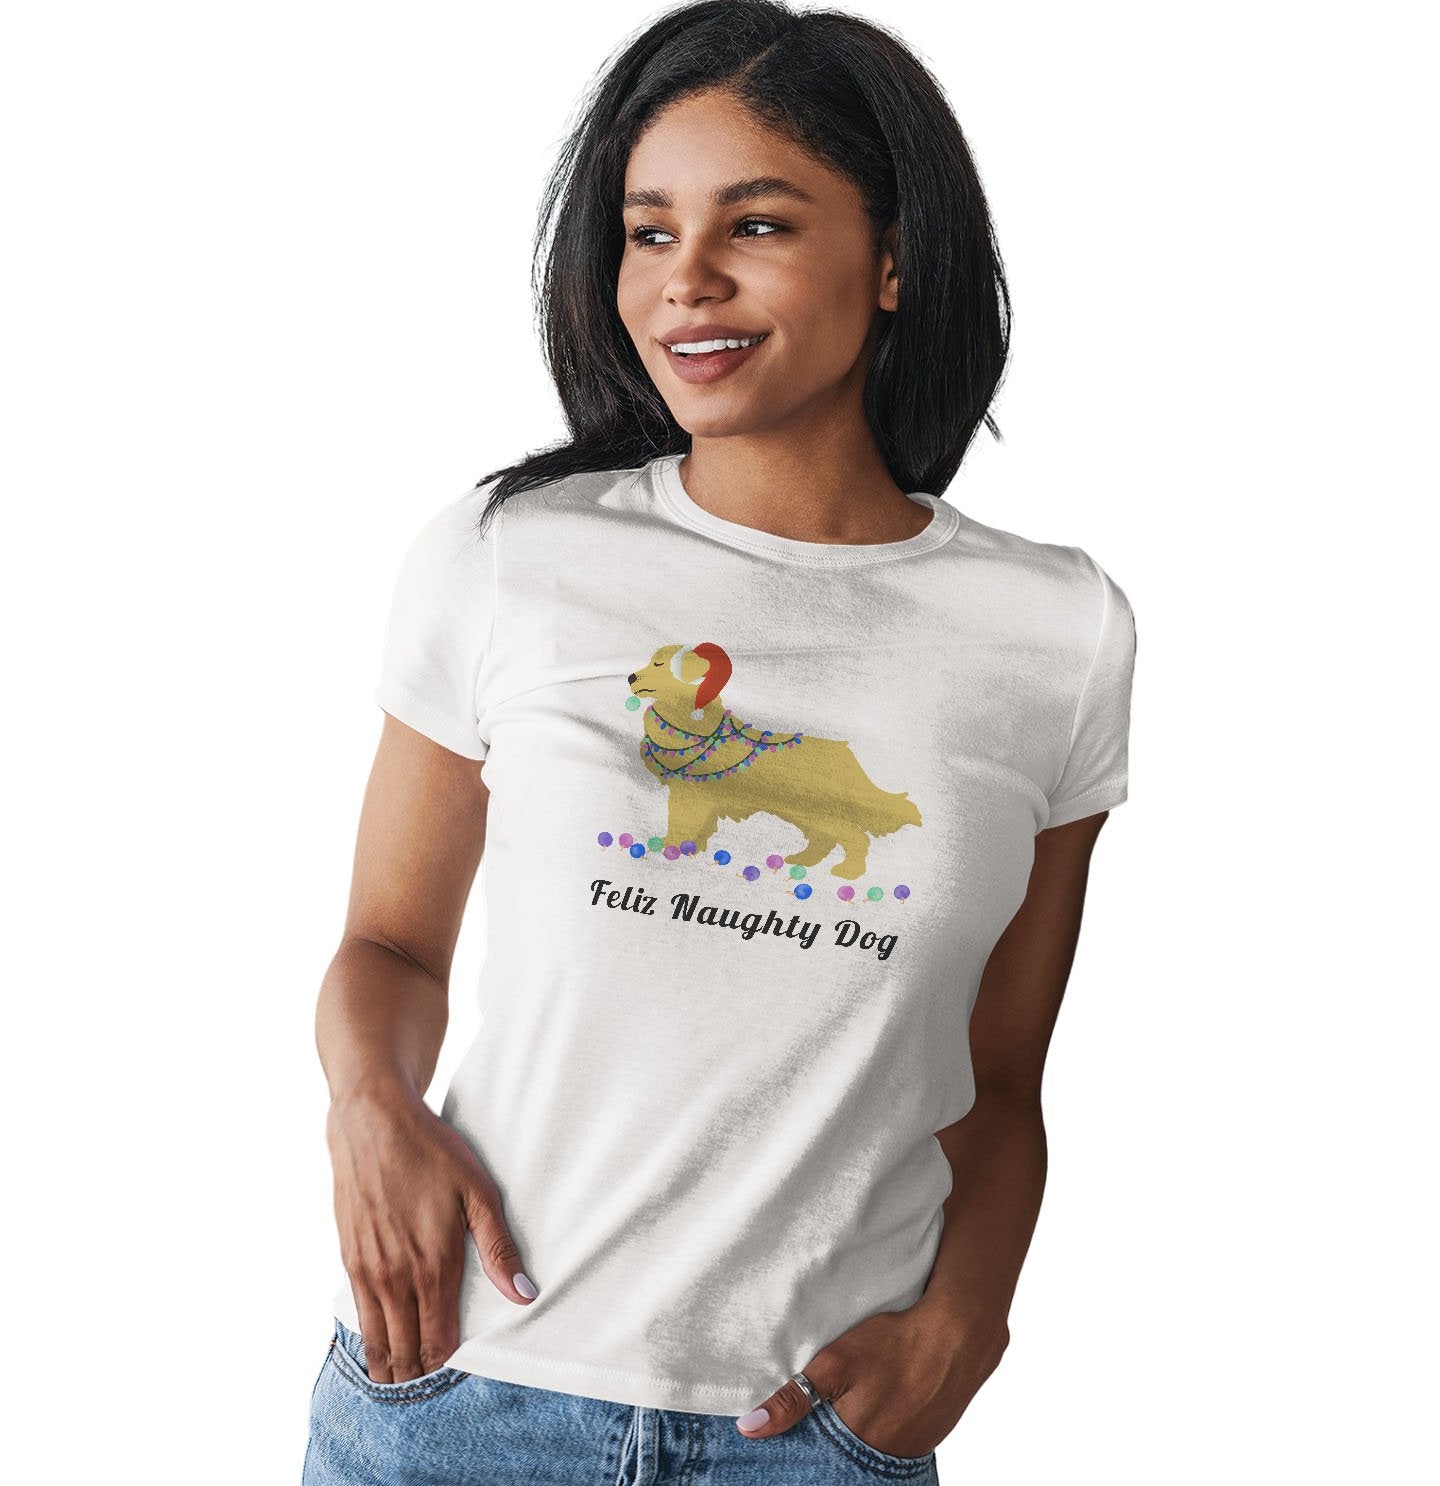 Feliz Naughty Dog Golden Retriever - Women's Fitted T-Shirt